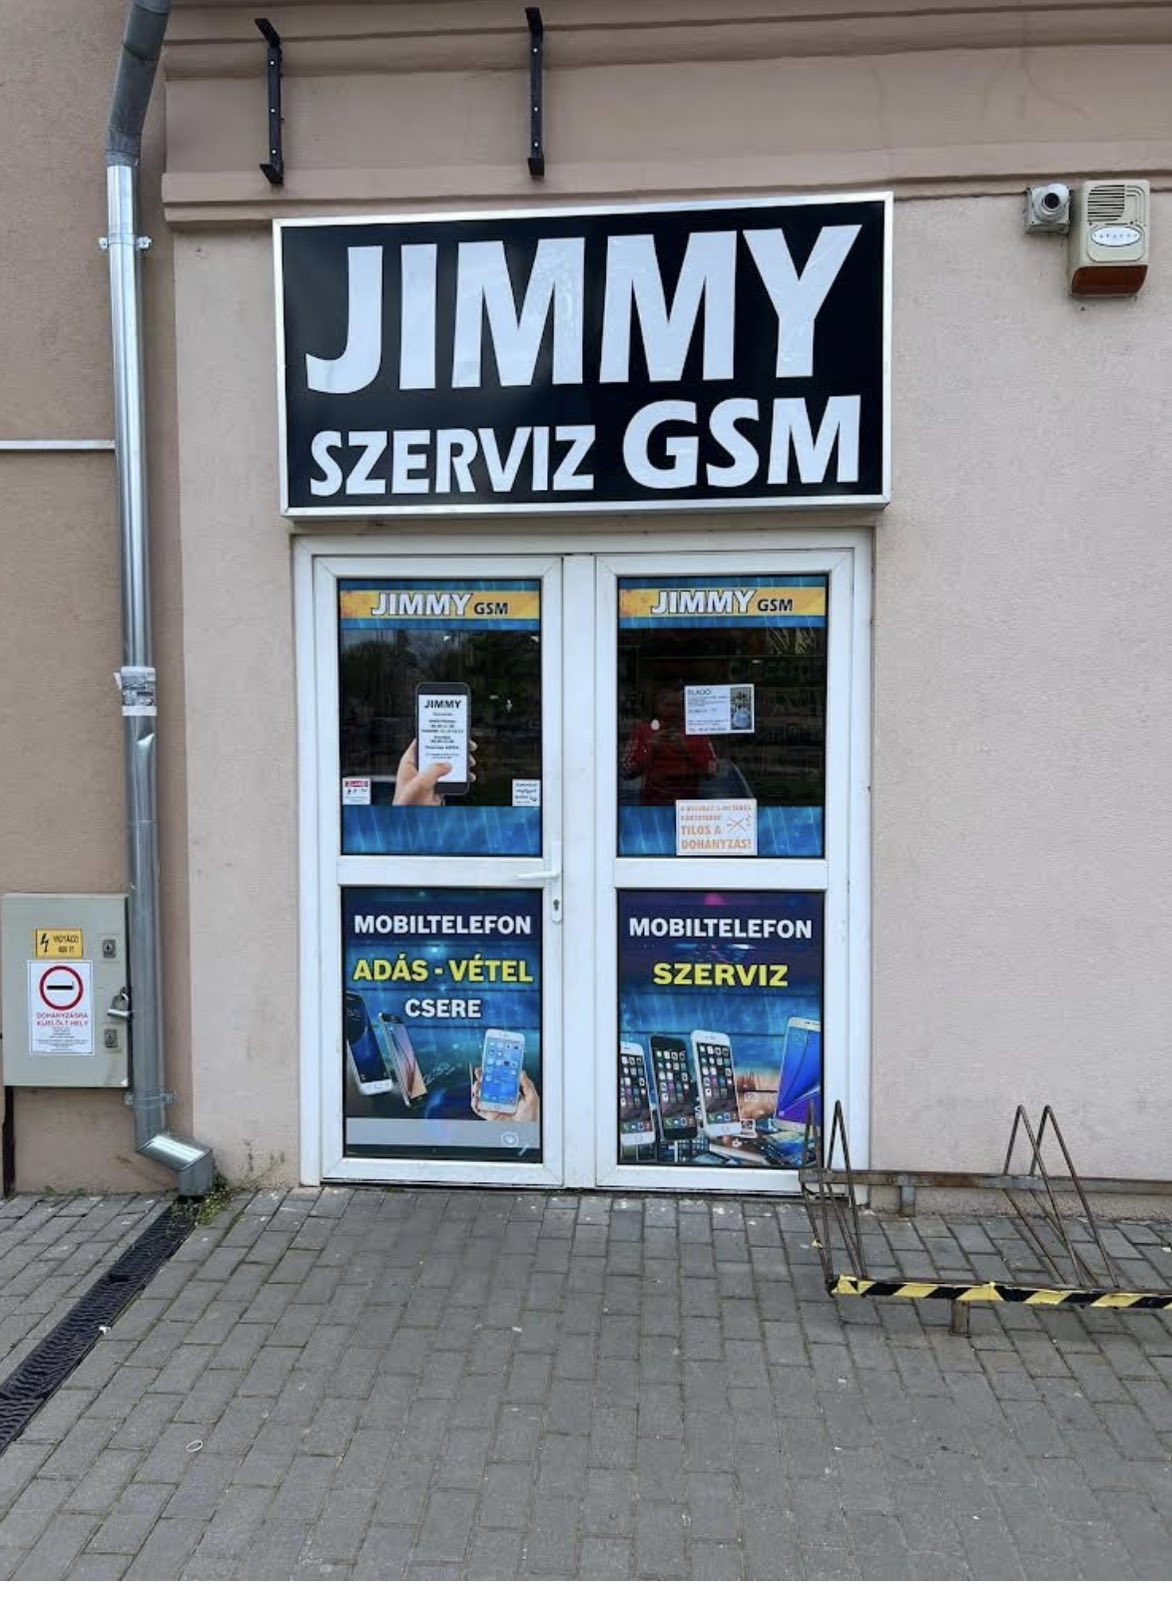 JIMMY III GSM - NETFONE PONT